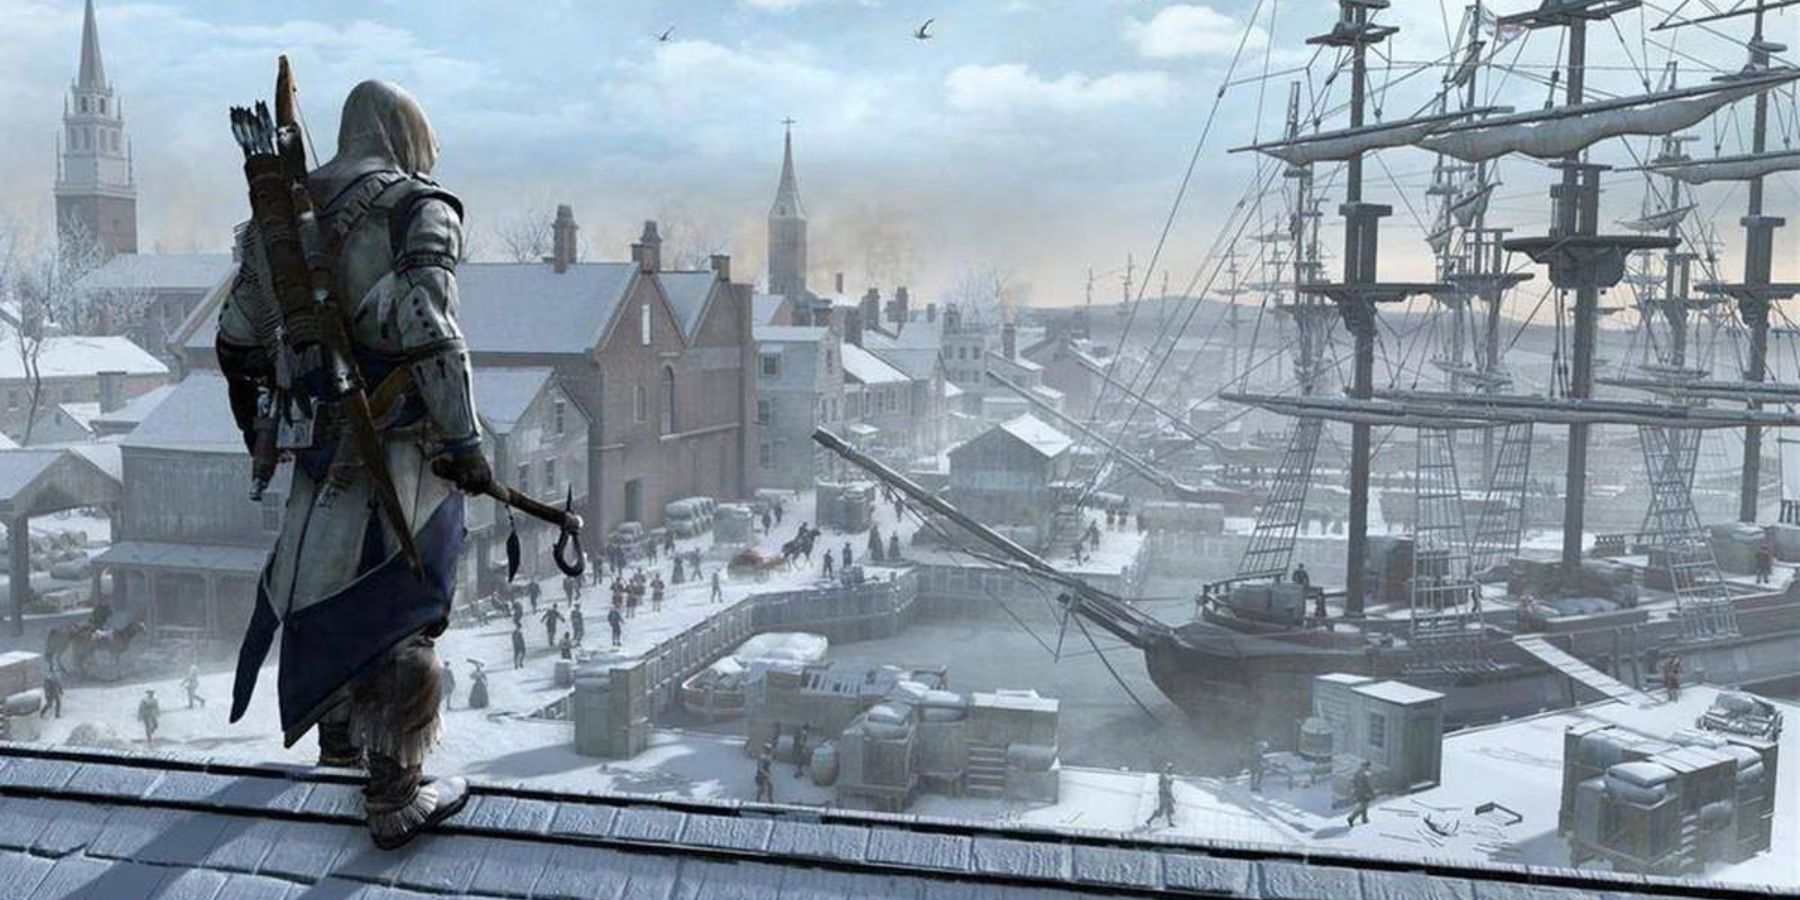 Assassin's Creed 3 Dock